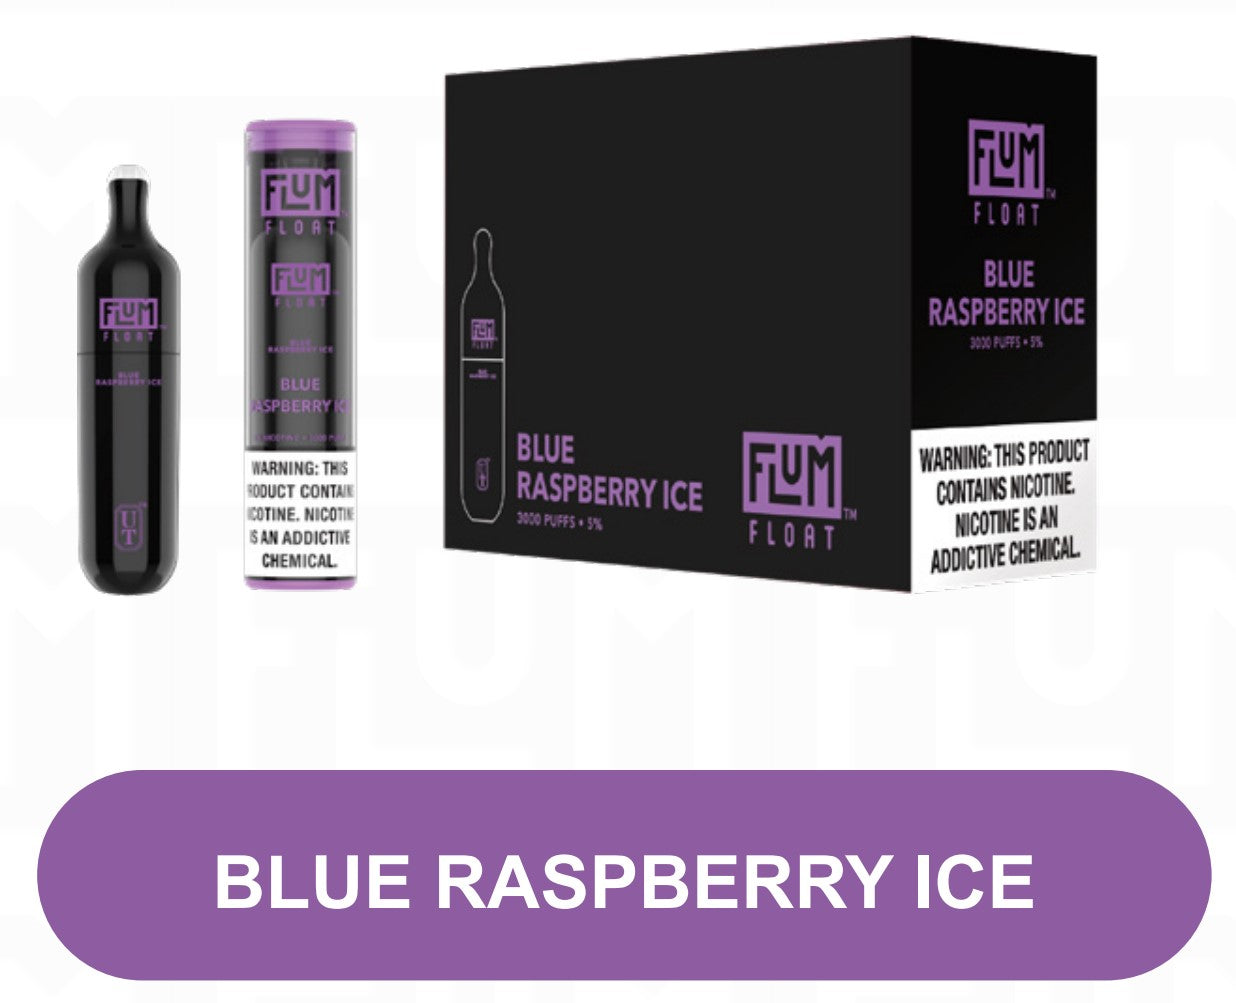 Flum Float Blue Raspberry Ice Handh Tobacco 9282